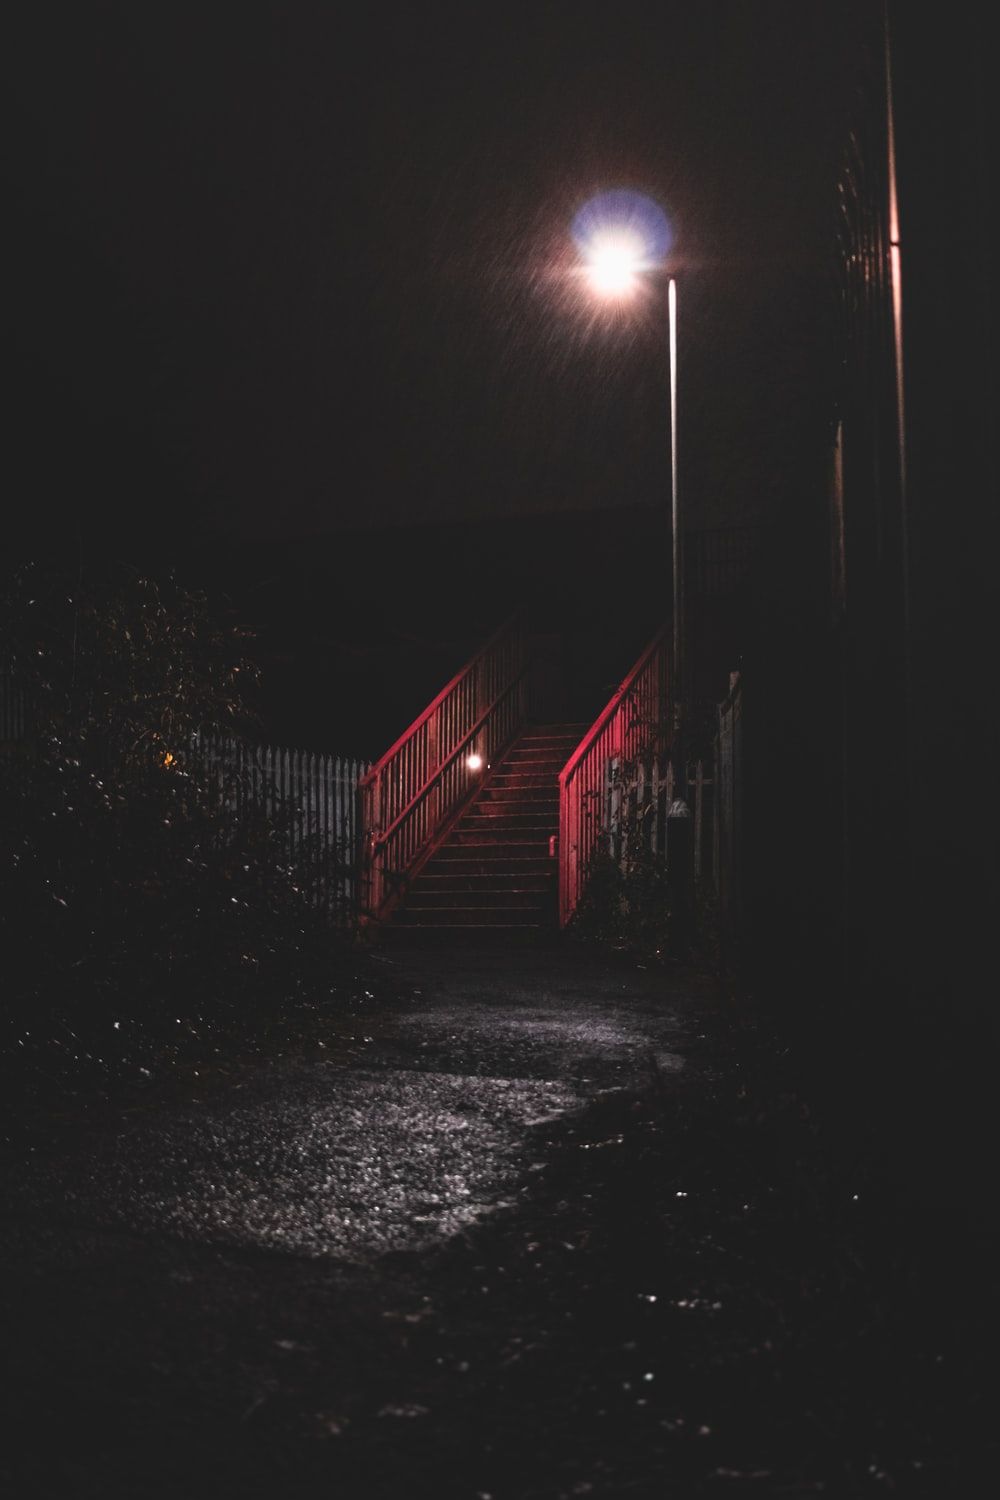 Rain Night Picture. Download Free Image